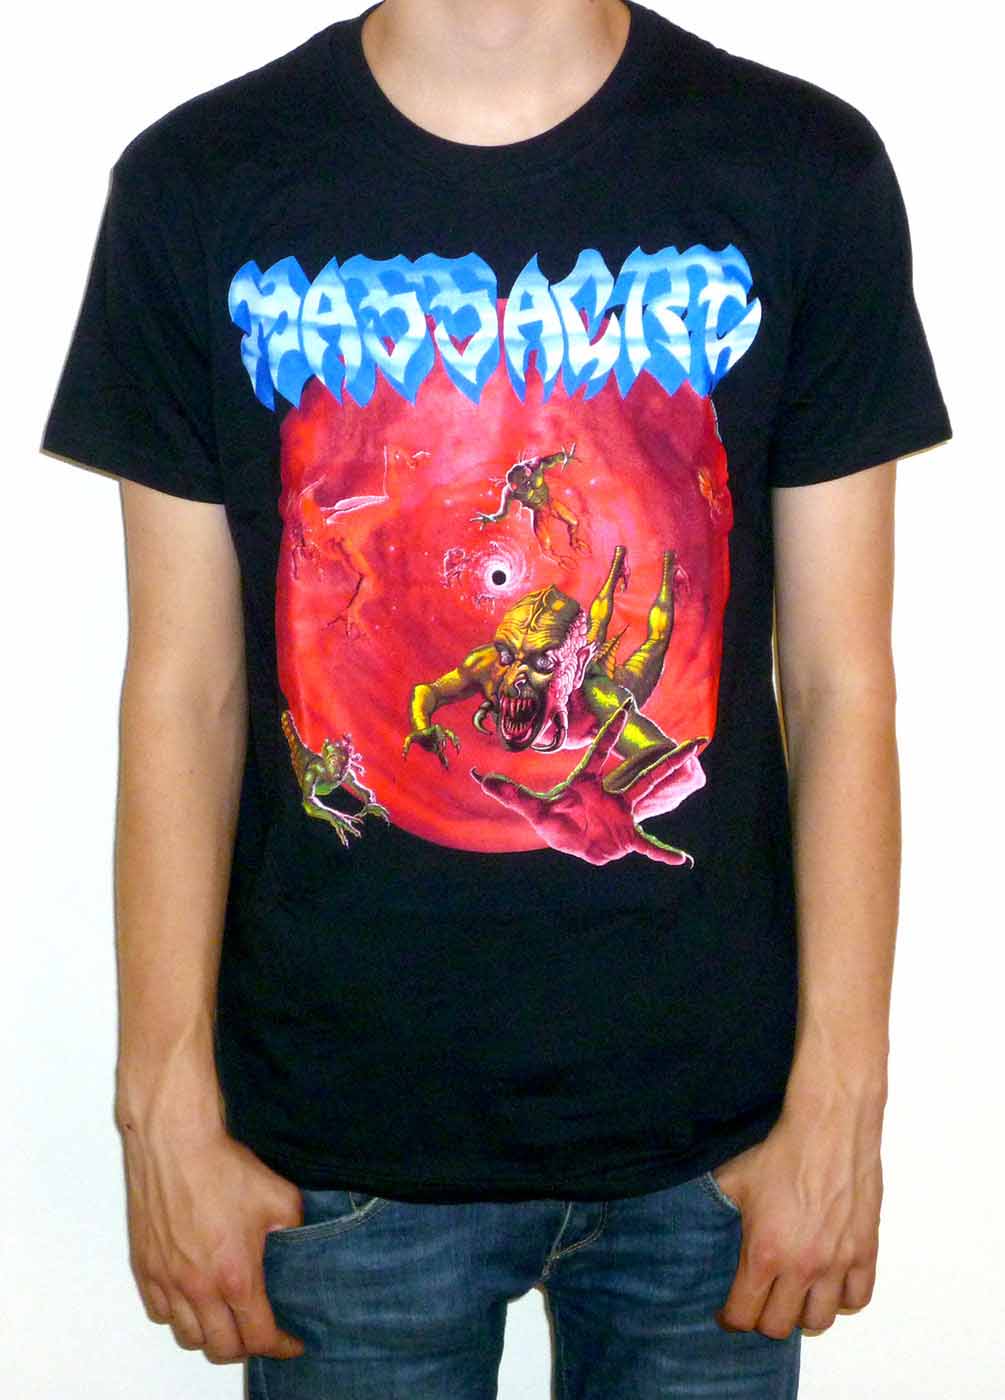 Massacre "From Beyond" Classic T-shirt